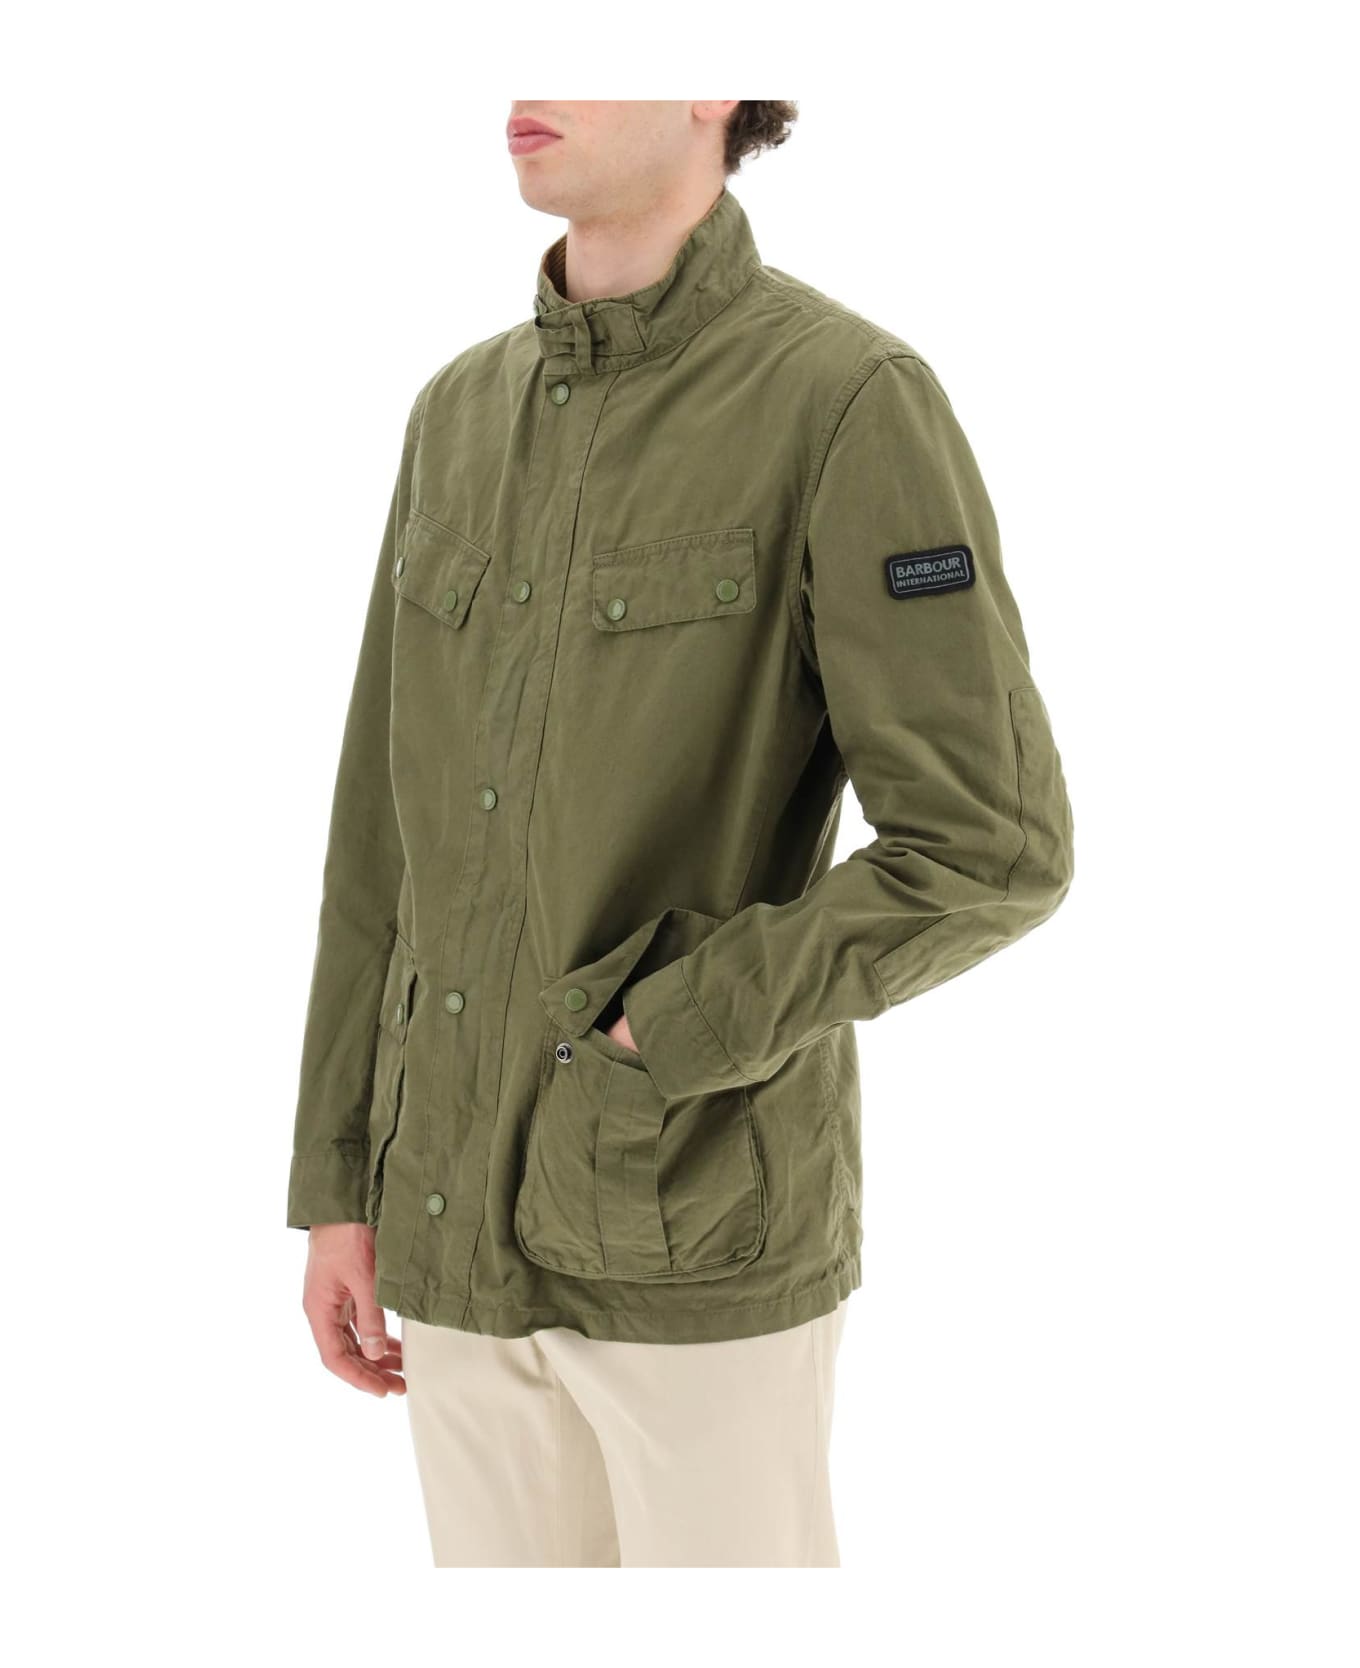 Barbour Green Military Jacket - DUSKYGREEN